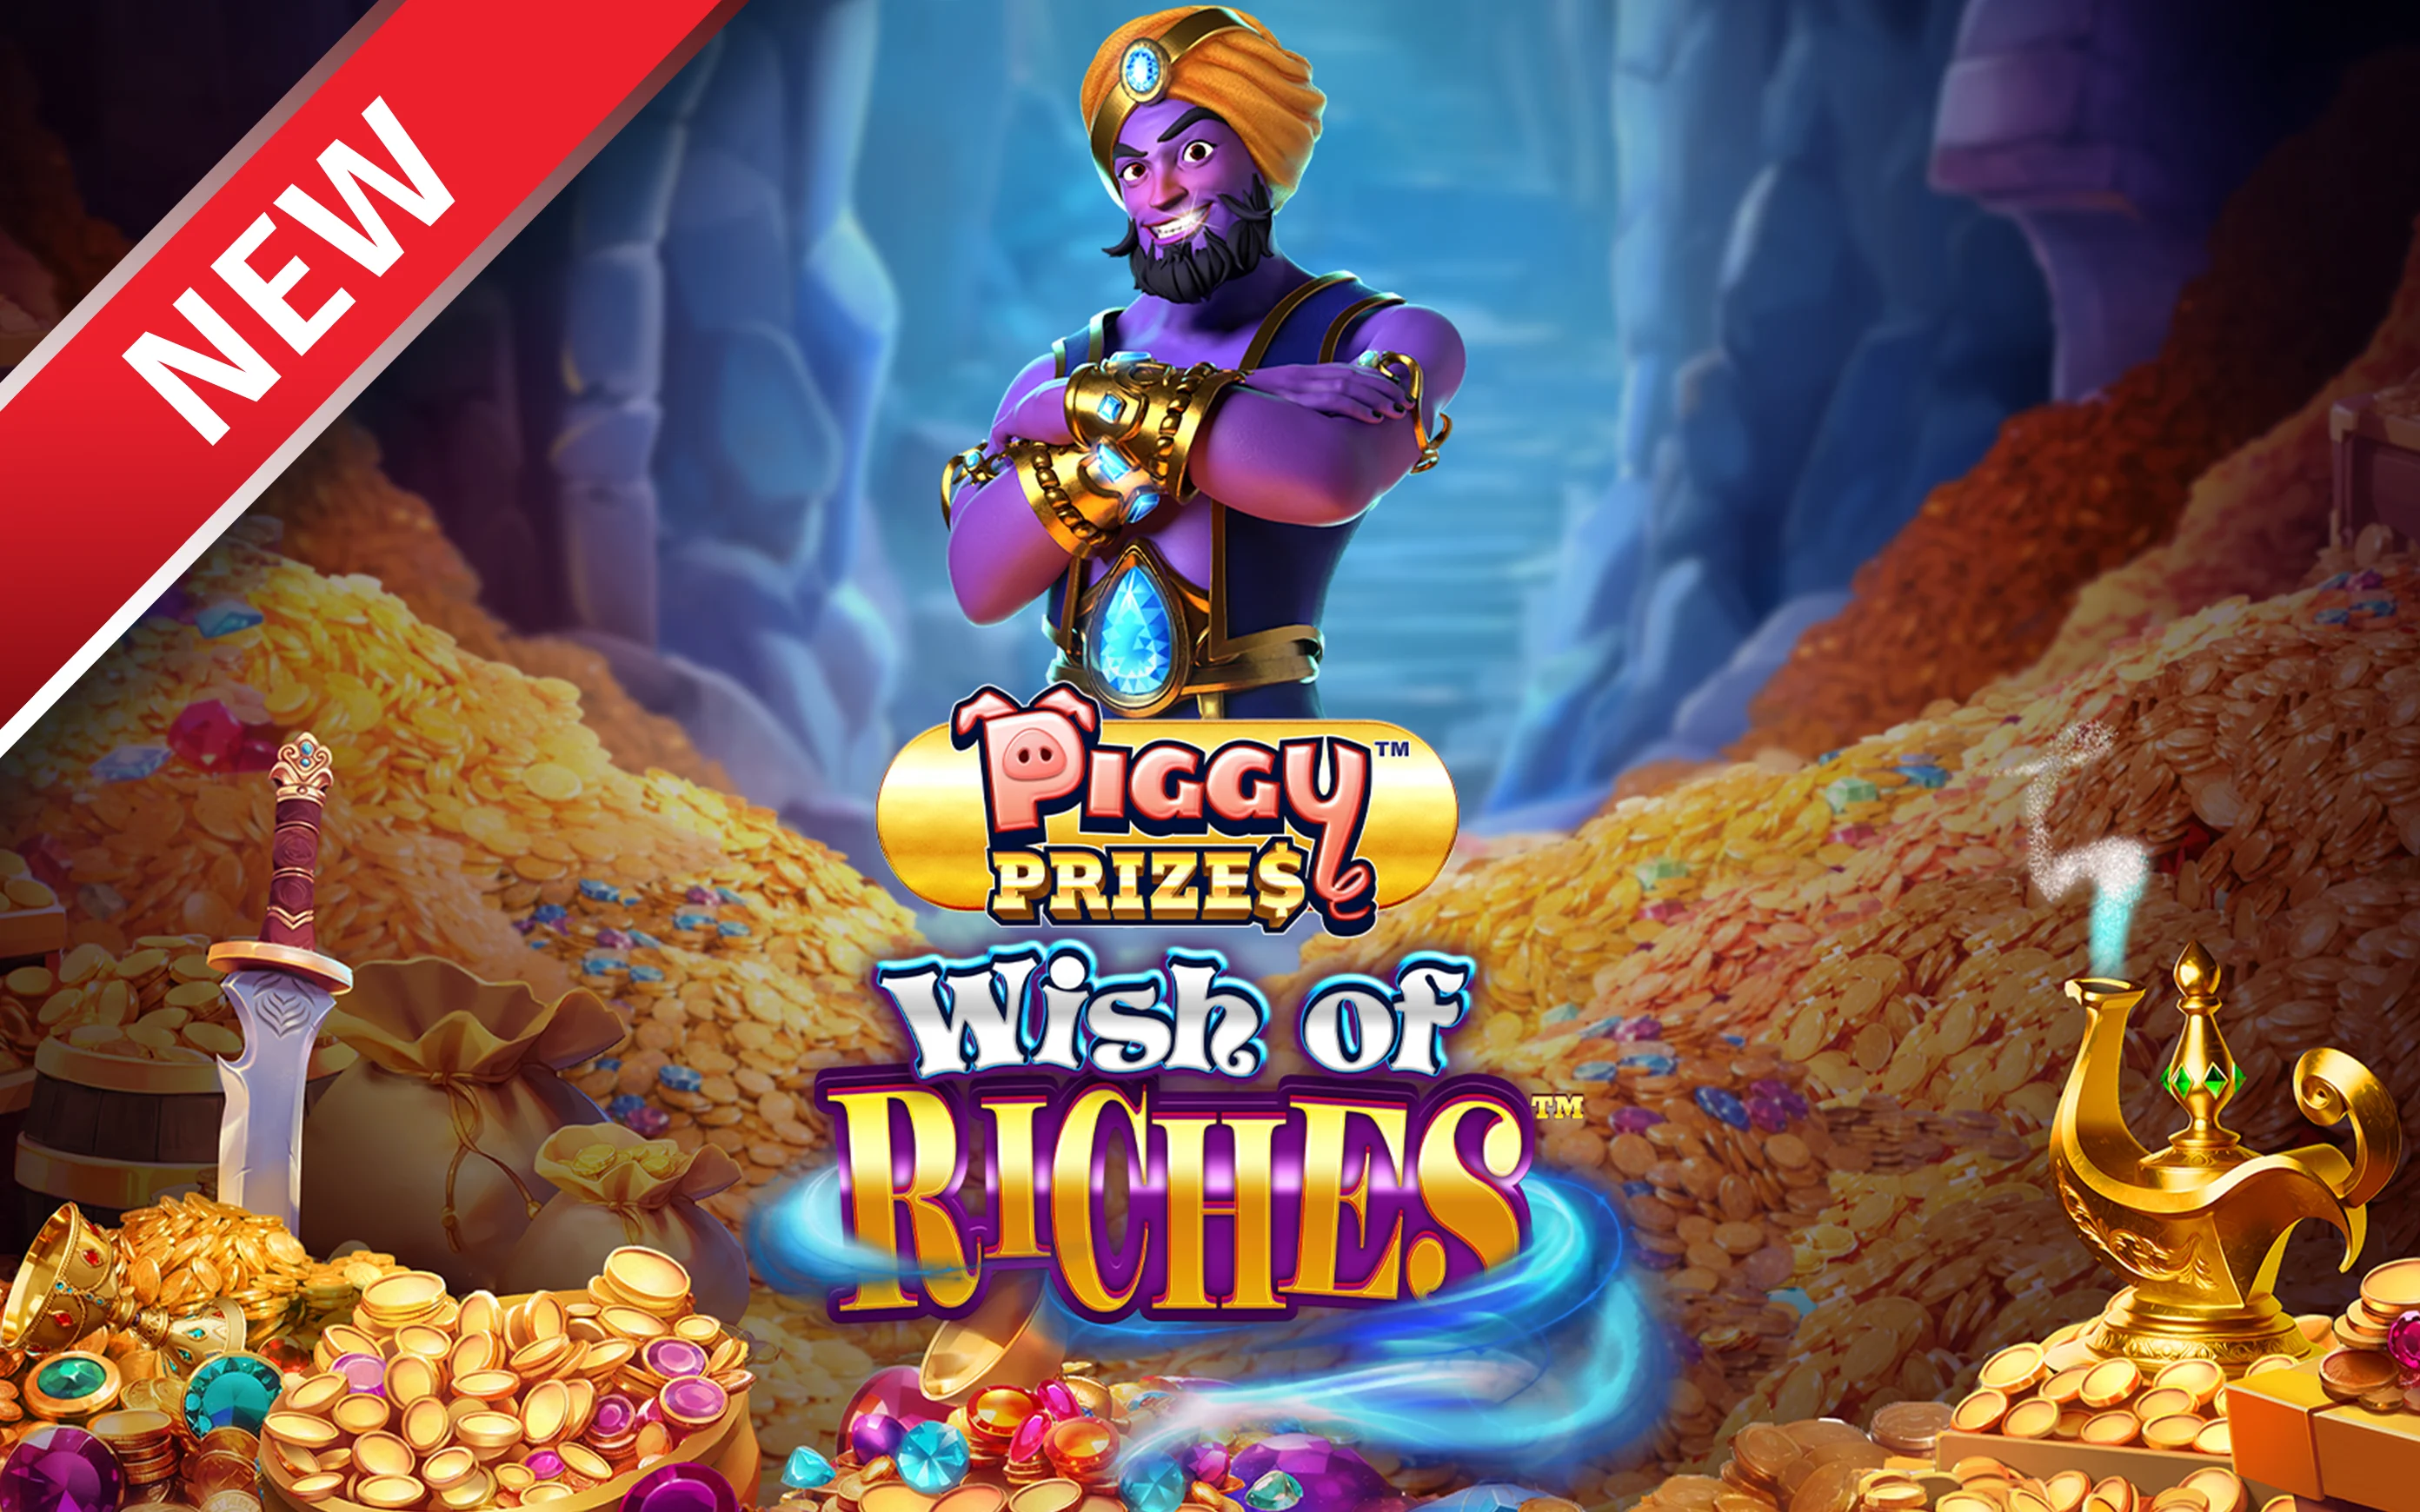 Juega a Piggy Prizes™ Wish of Riches™ en el casino en línea de Starcasino.be